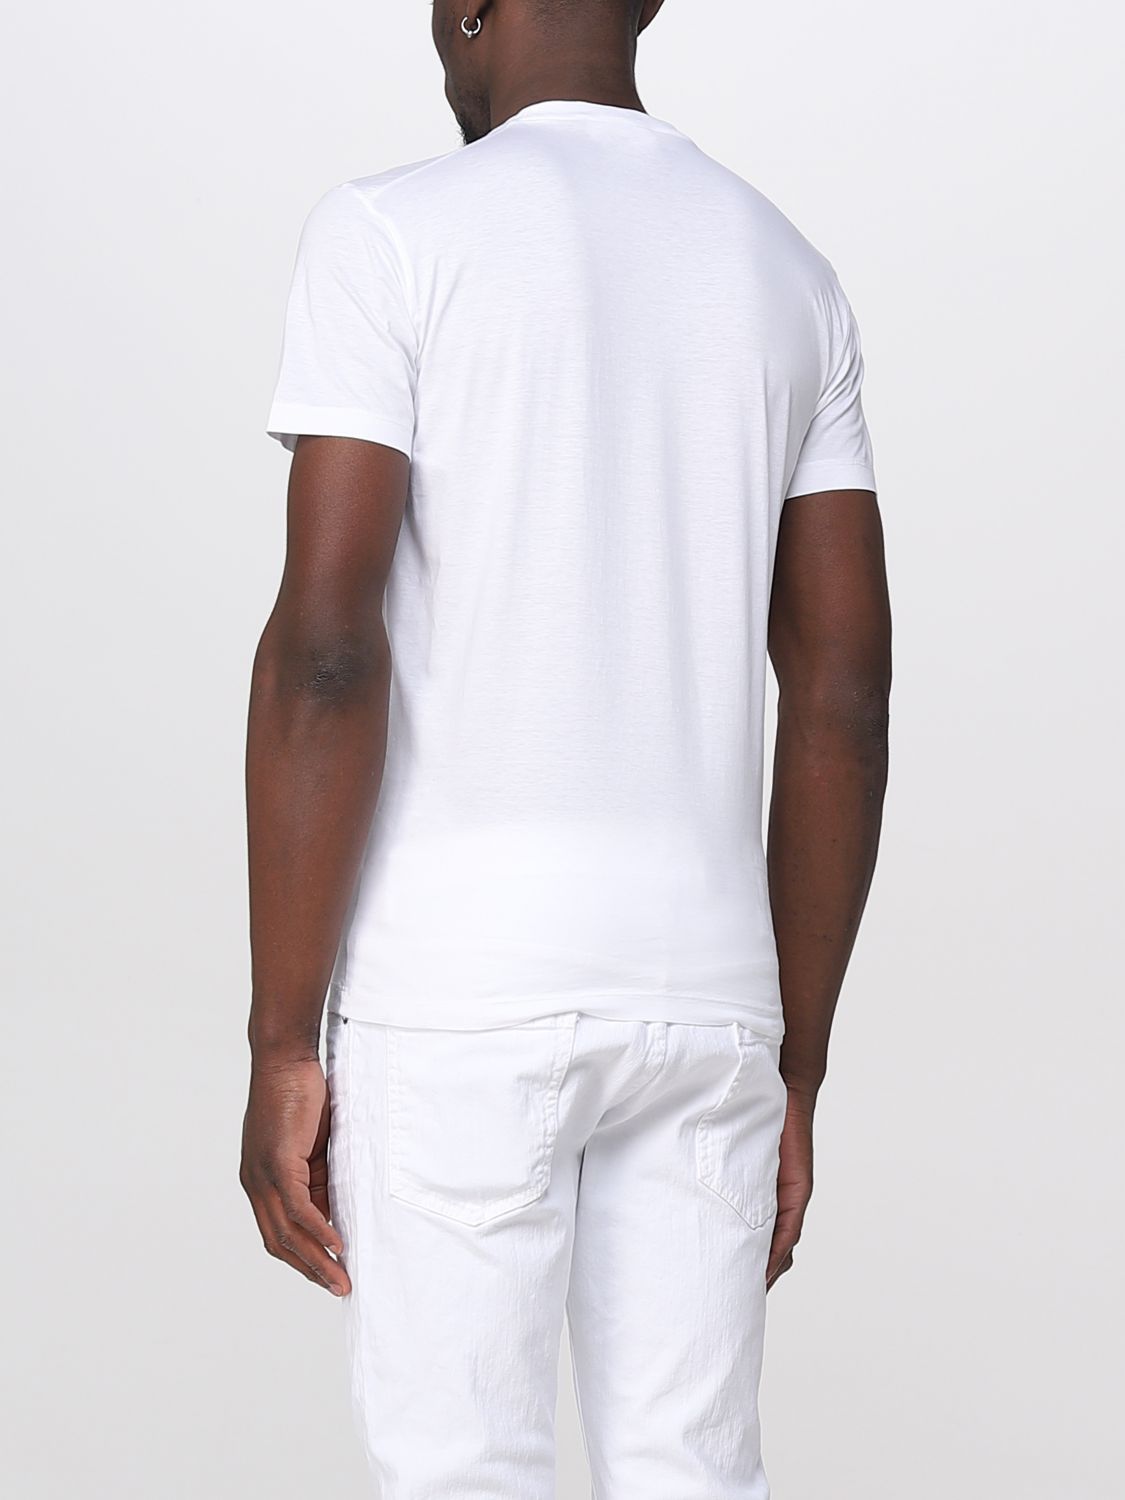 krab Stevig ongezond DSQUARED2: t-shirt for man - White | Dsquared2 t-shirt S79GC0003S23009  online on GIGLIO.COM